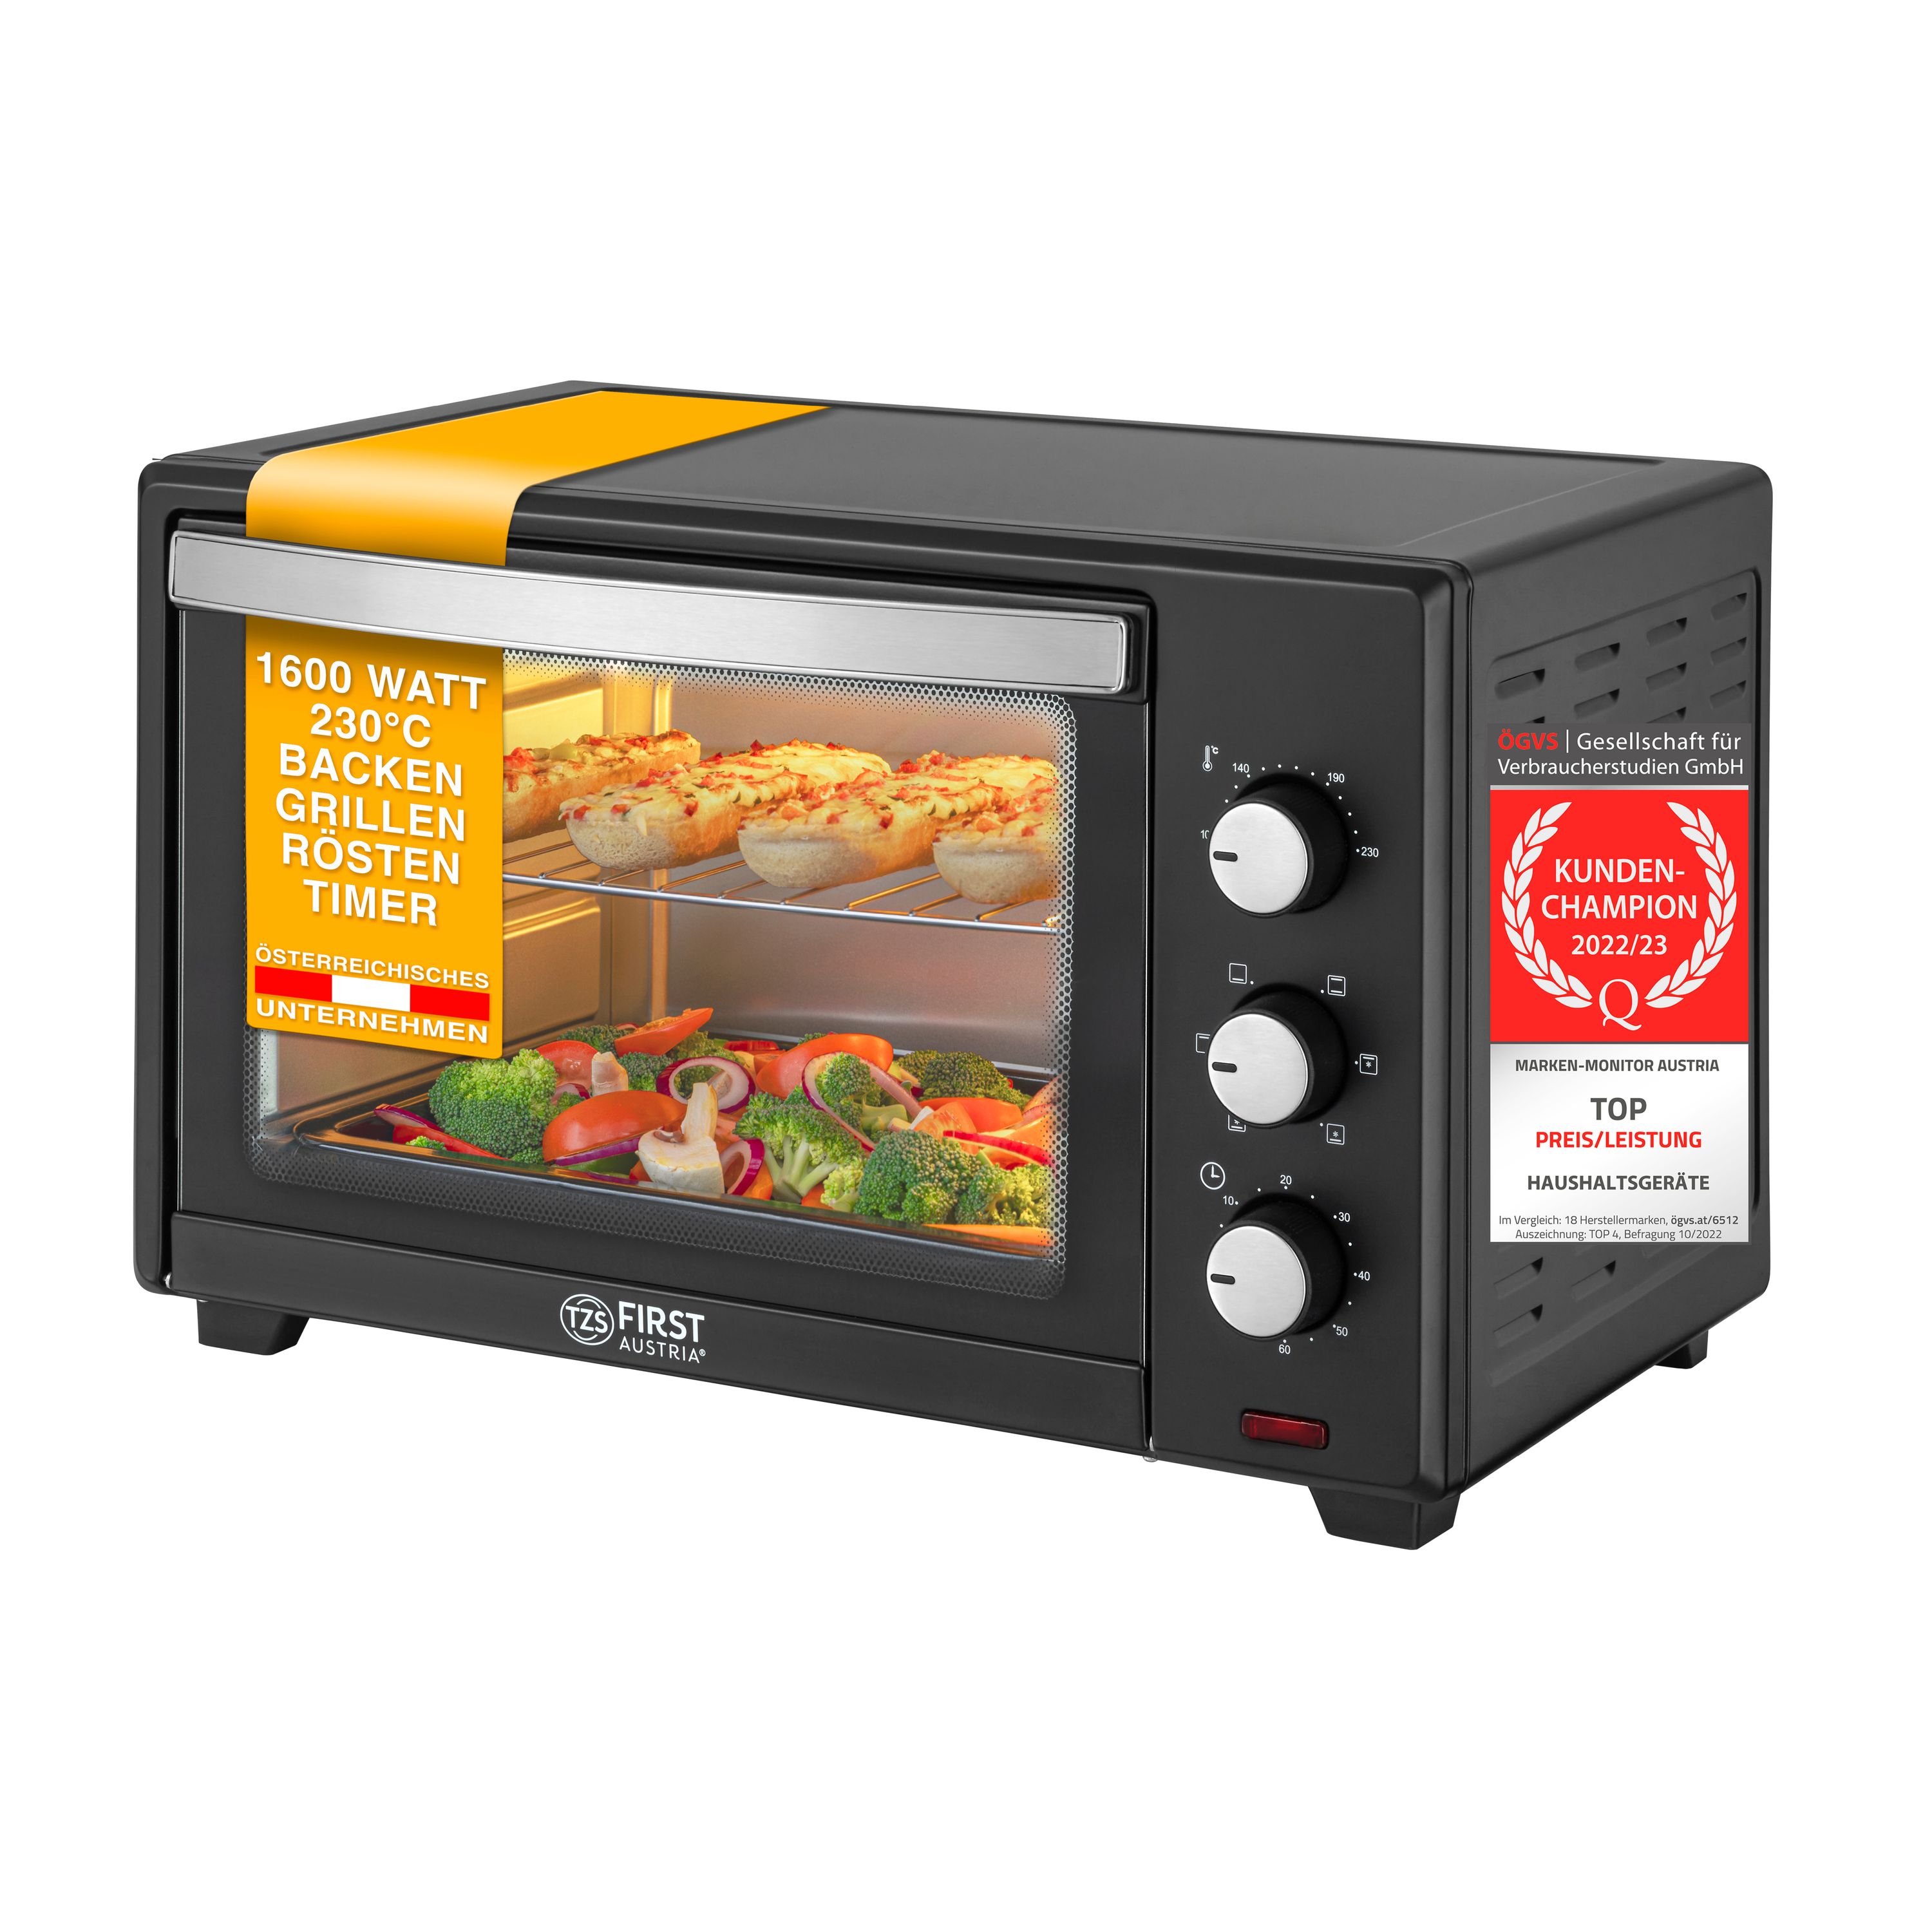 Mini oven | capacity 30L or 35L 